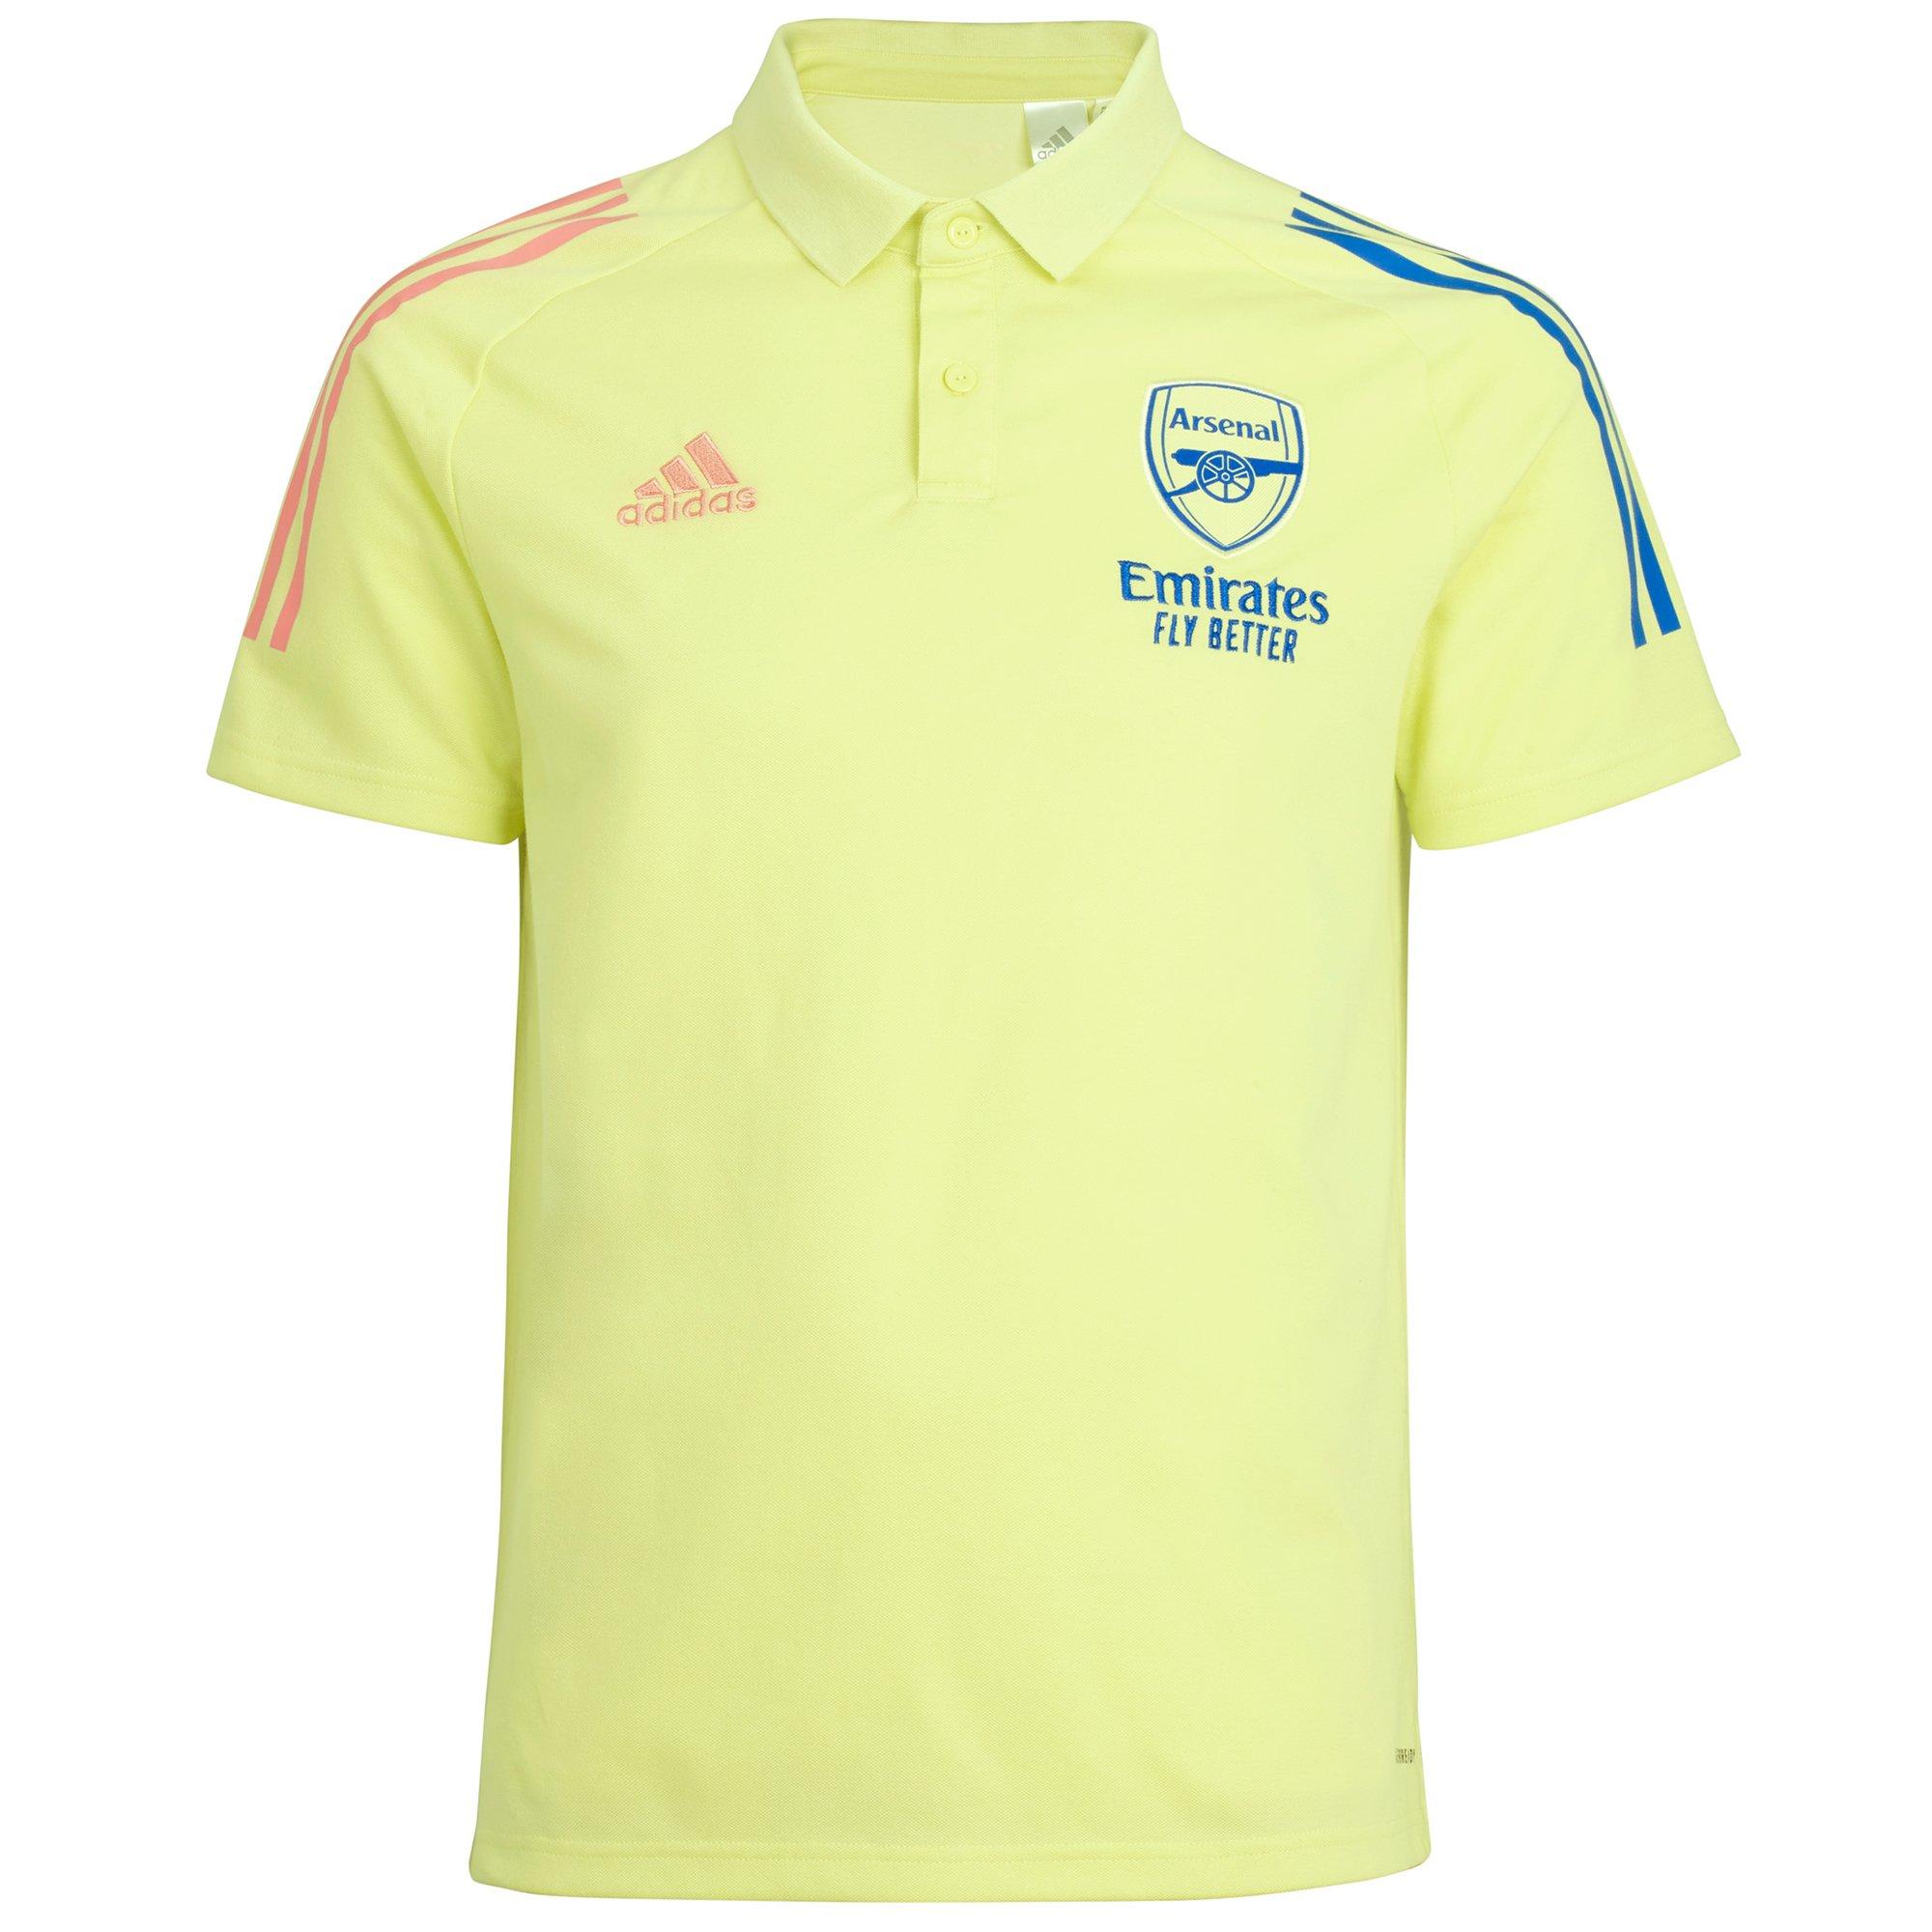 yellow arsenal shirt